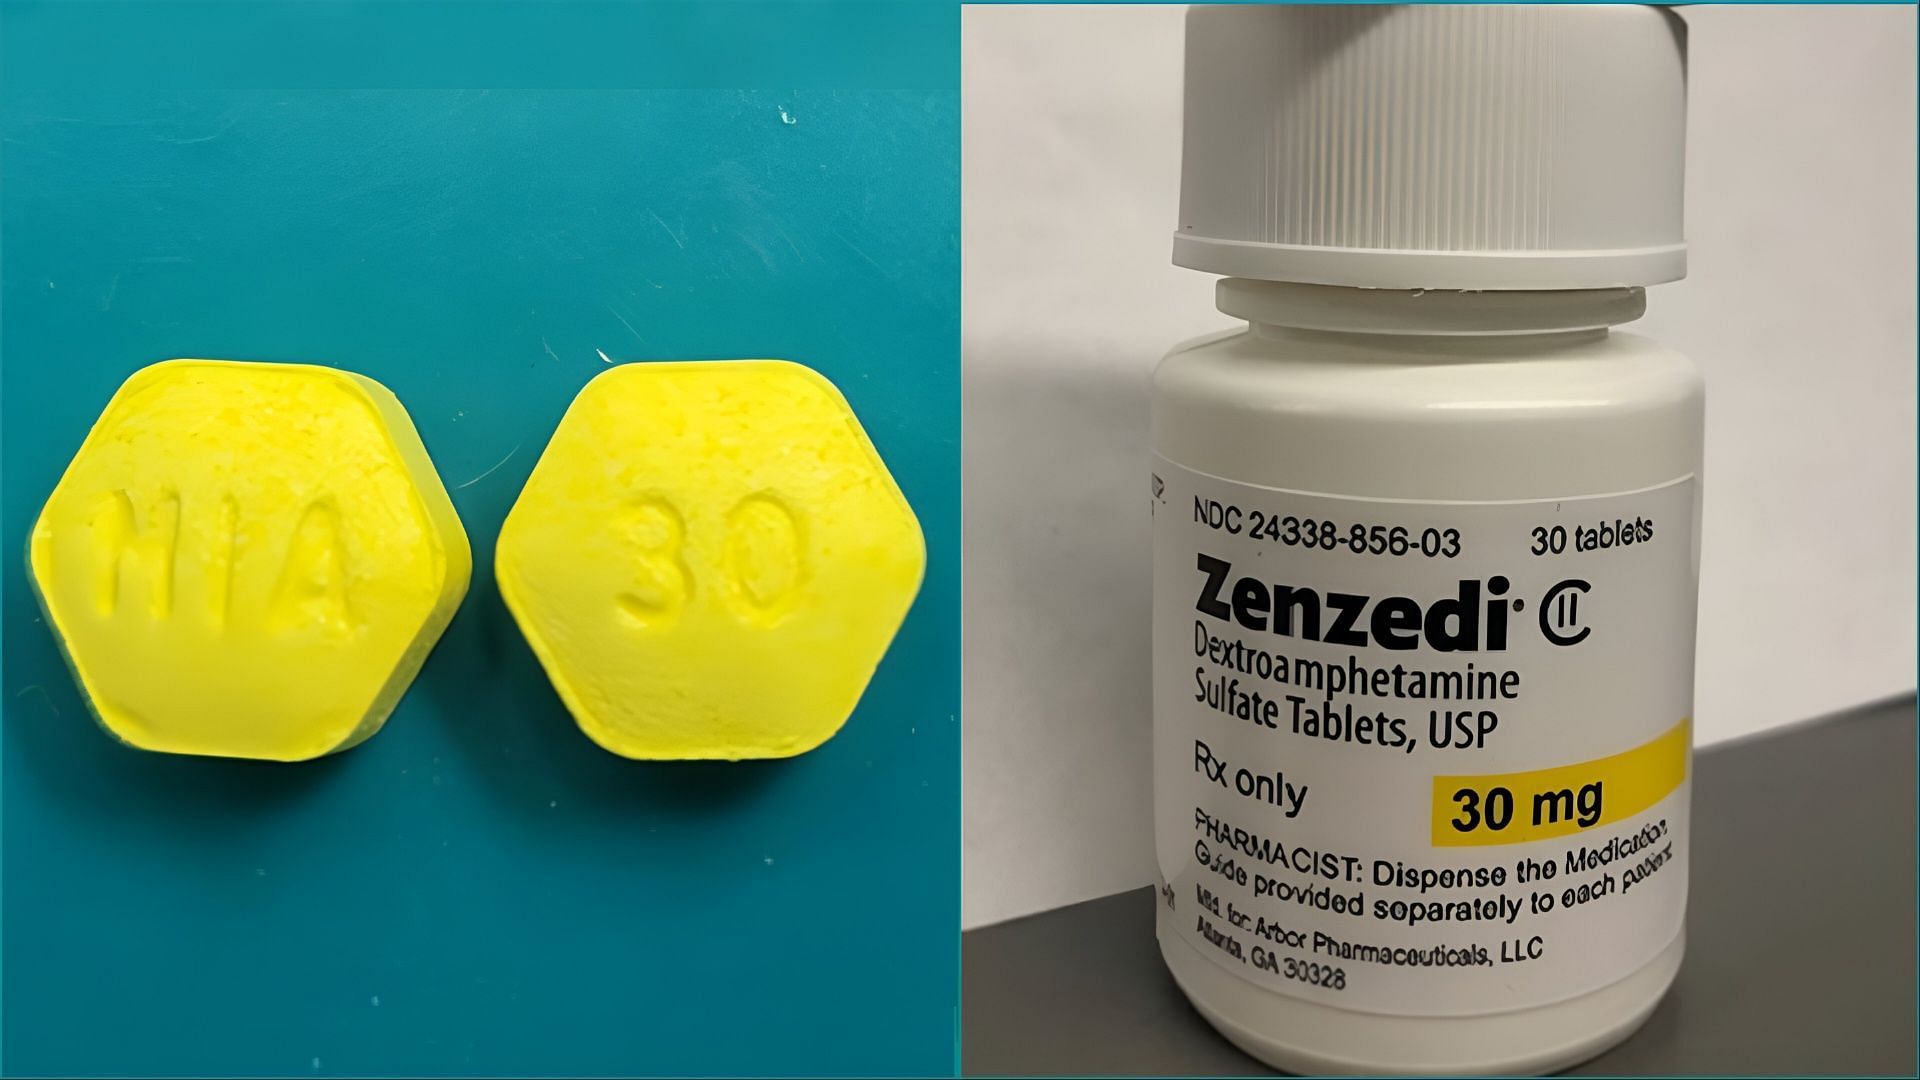 Azurity Pharmaceuticals, Inc. recalls Zenzedi&reg; ADHD tablets over pill mixup concerns (Image via FDA)